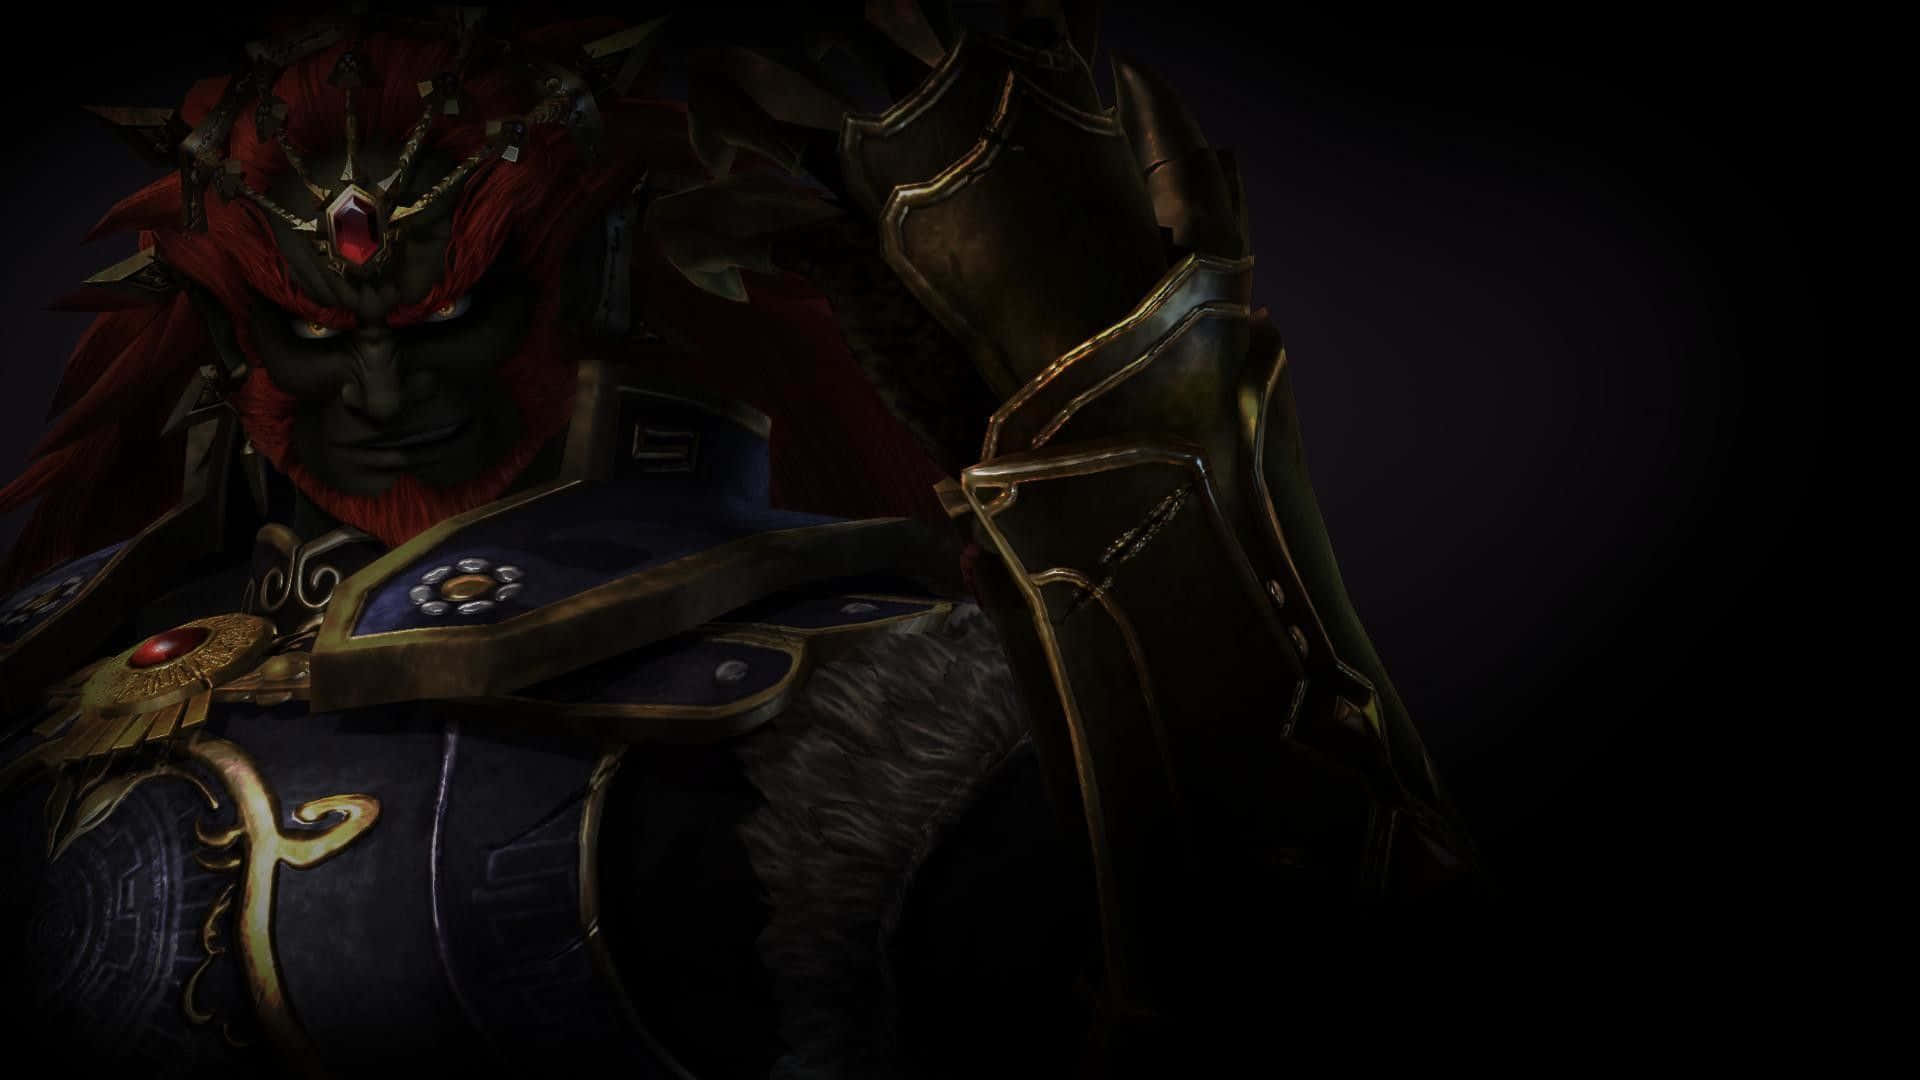 Ganondorf - The King of Evil in his full glory Wallpaper